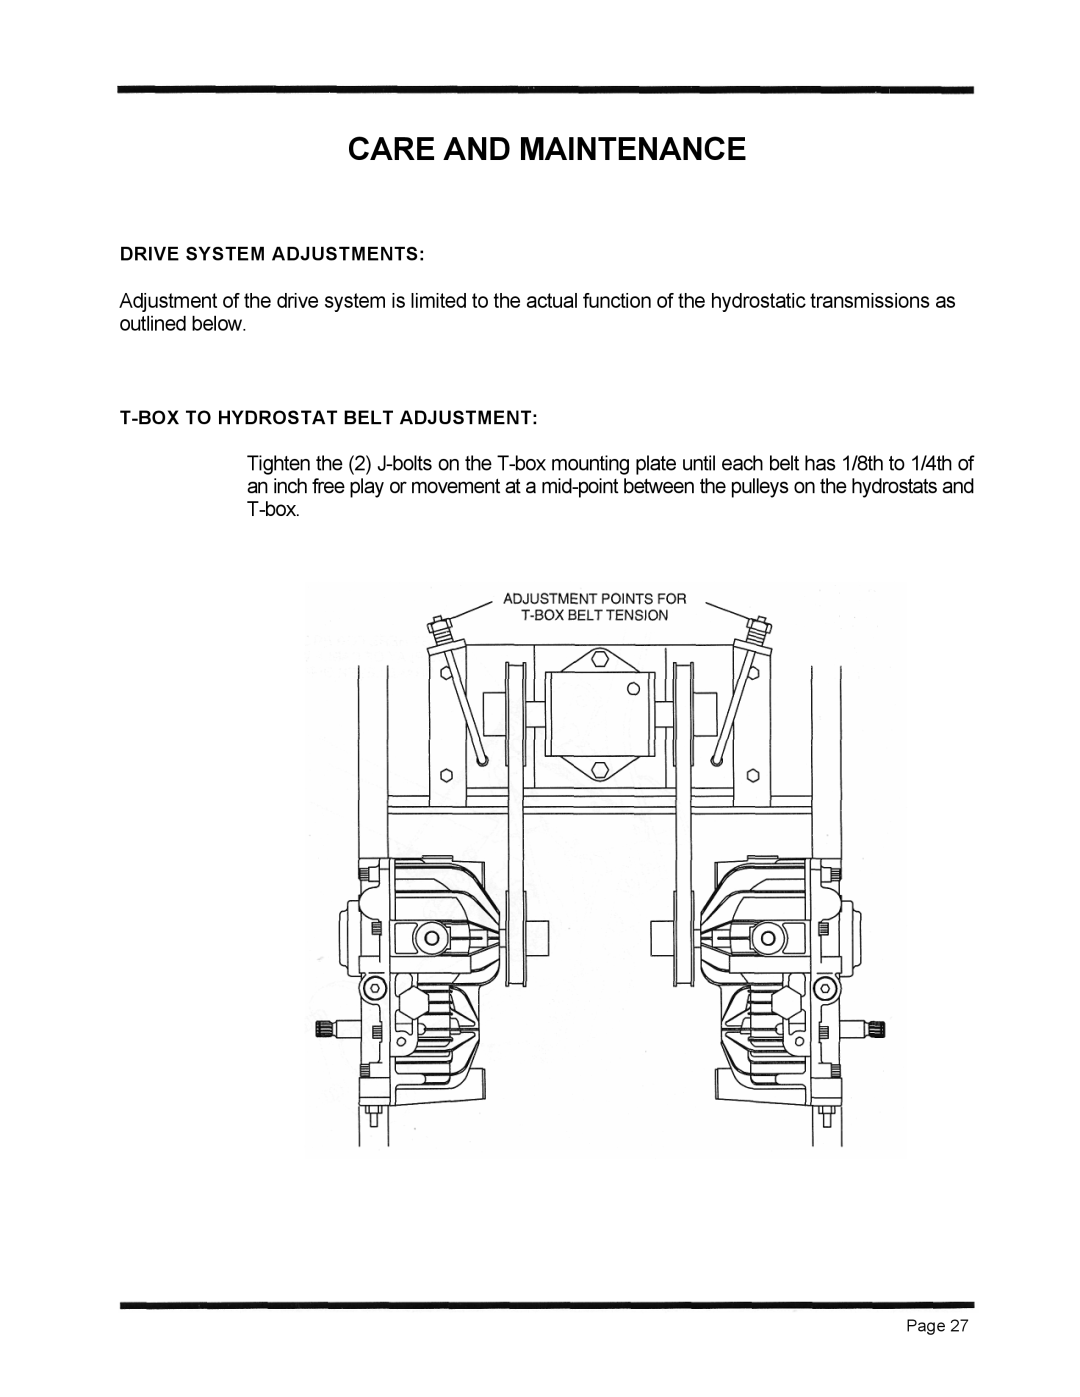 Dixon 6601 Series manual Care And Maintenance, Drive System Adjustments, T-Boxto Hydrostat Belt Adjustment 